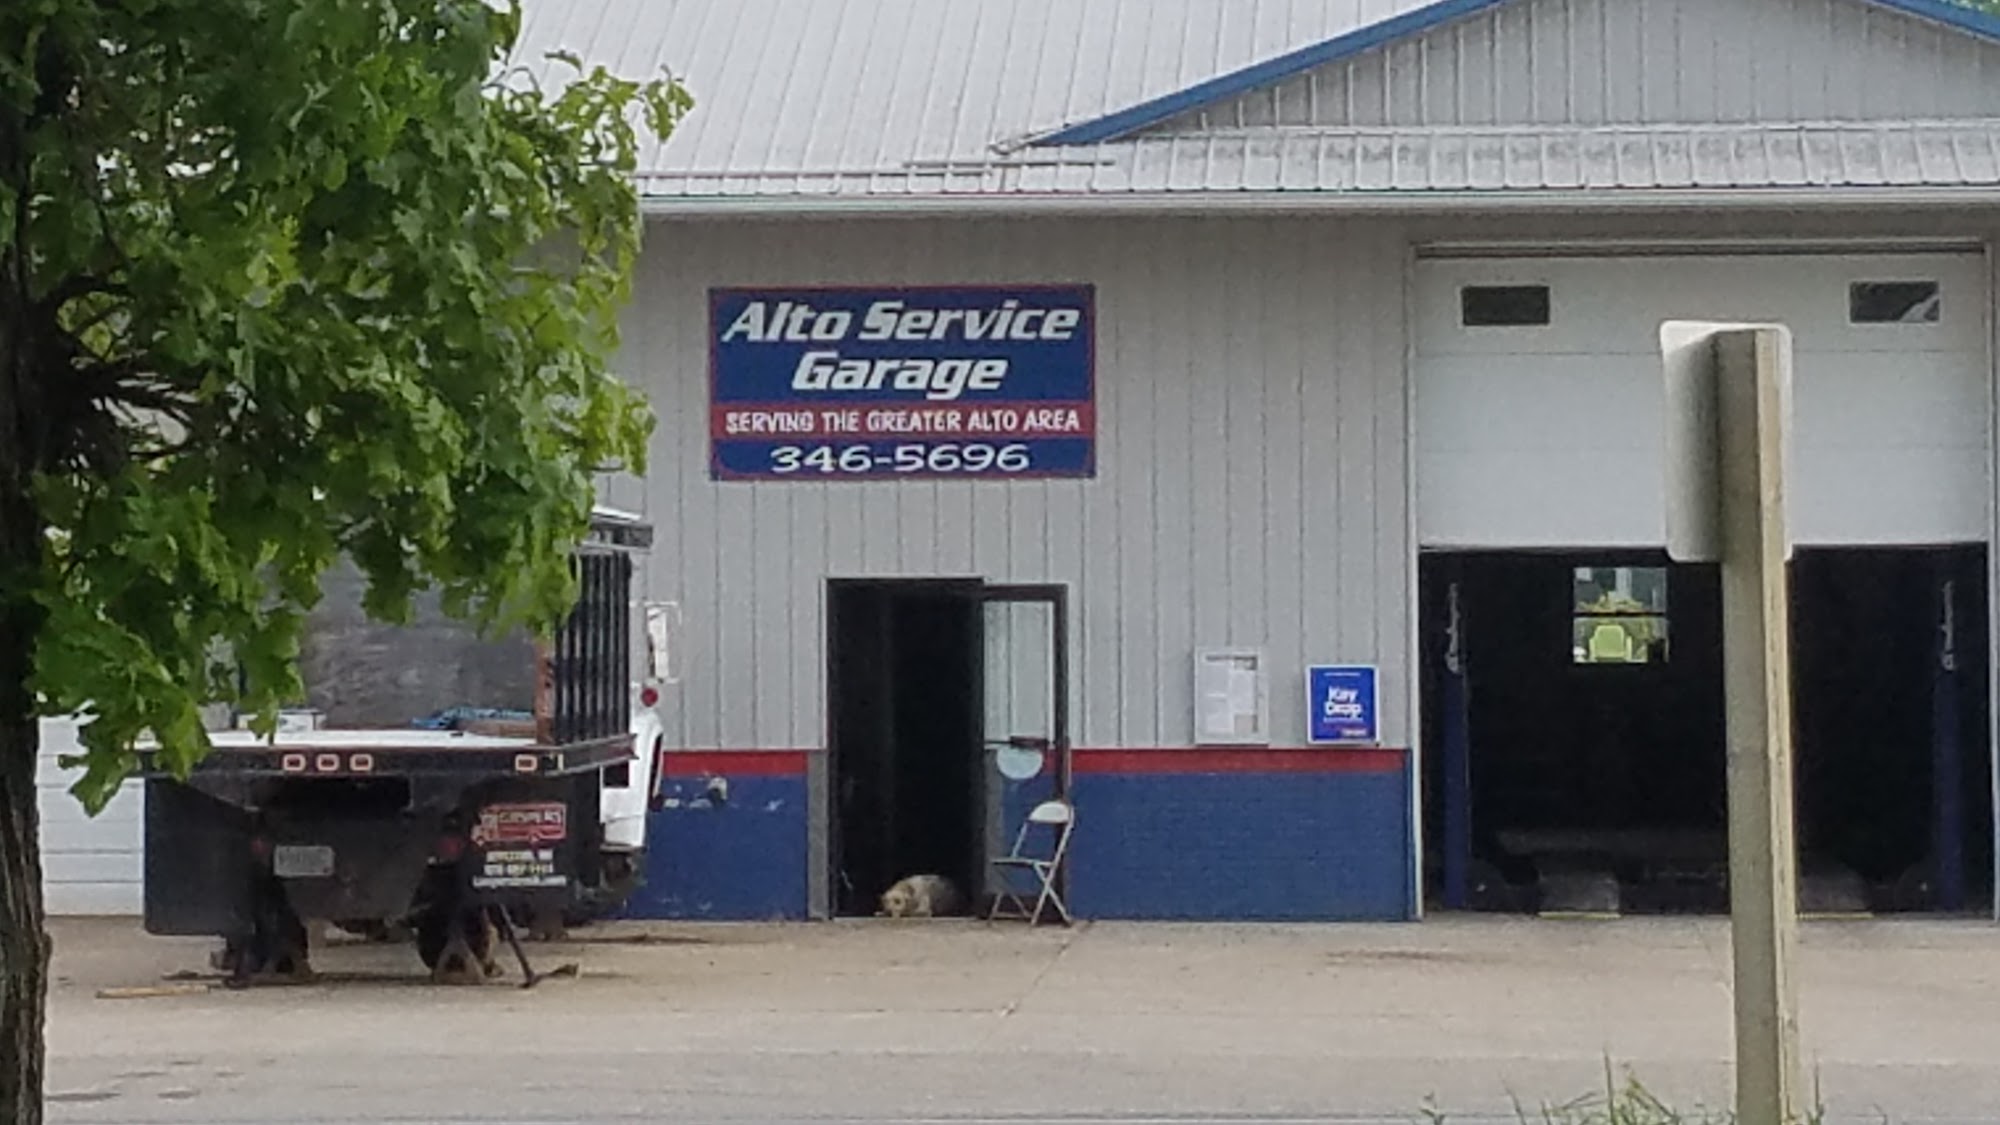 Alto Service Garage